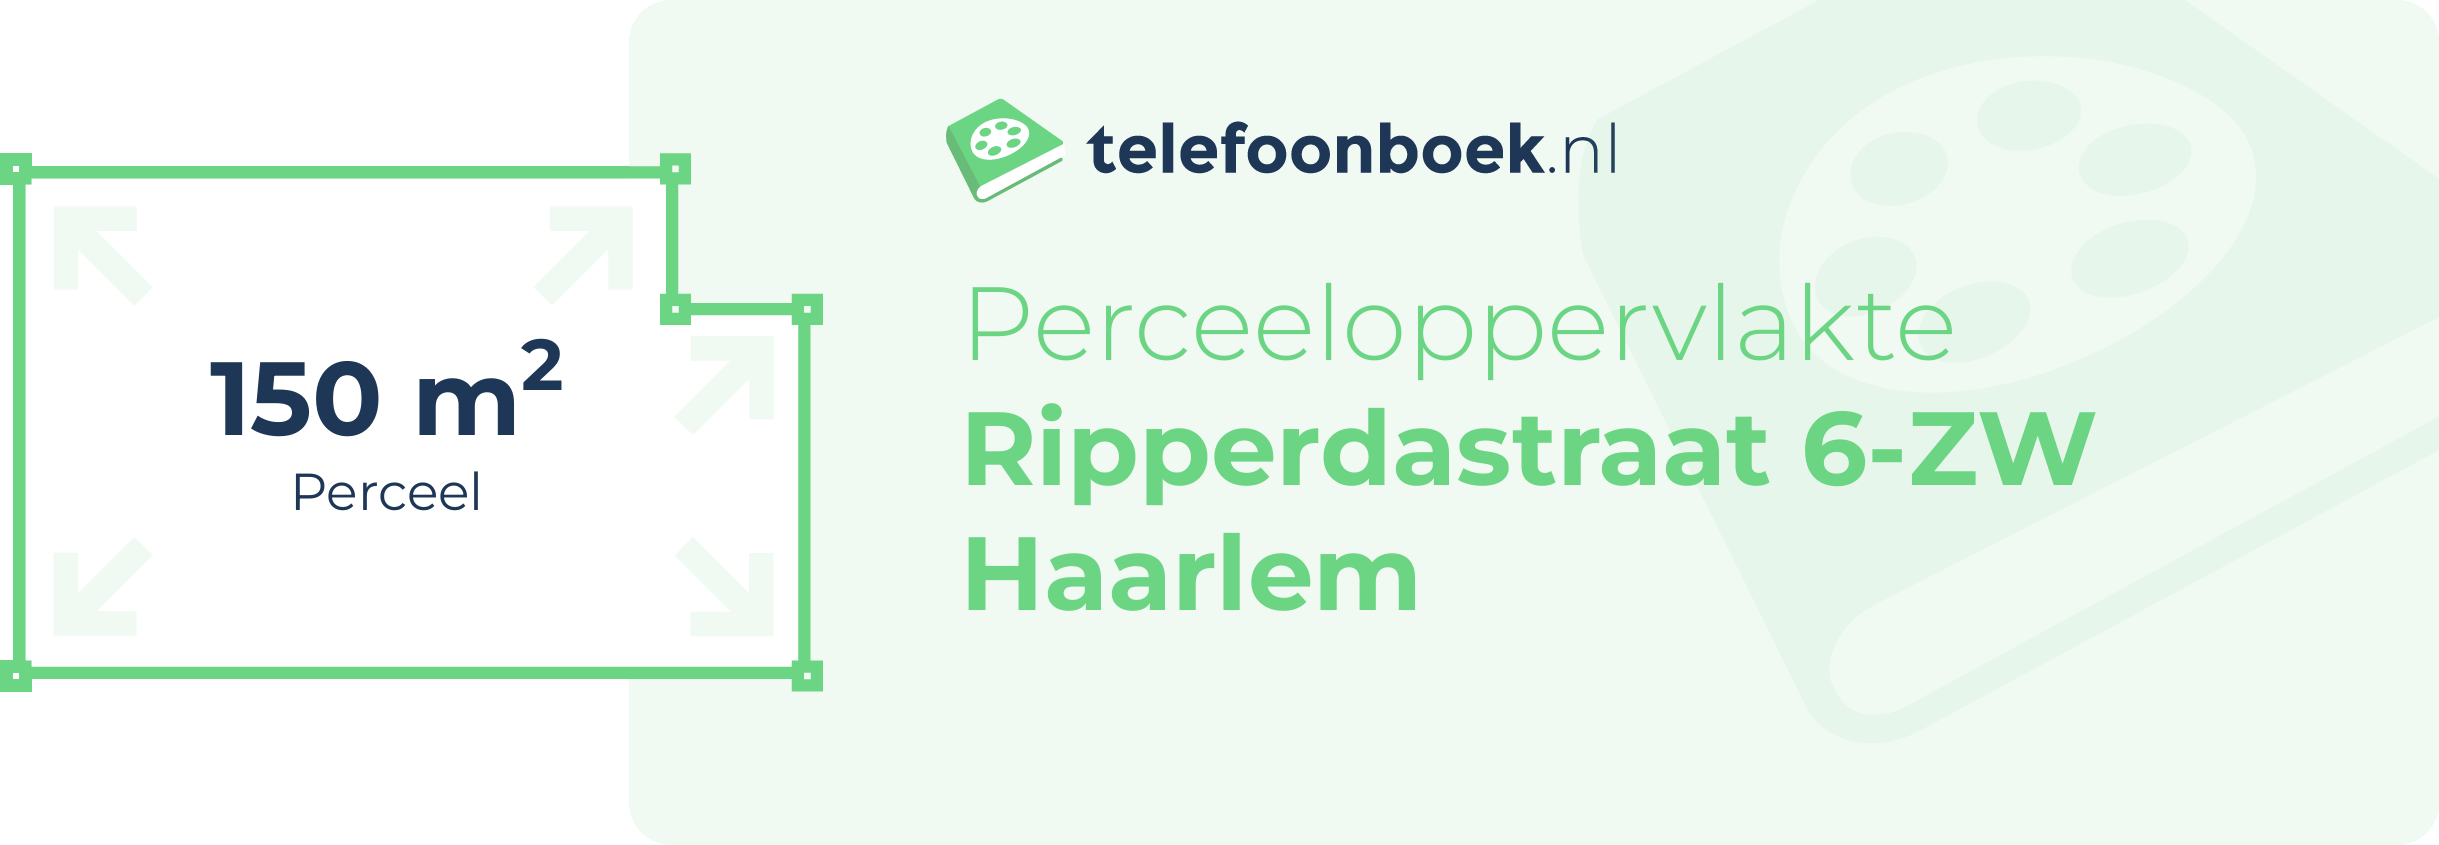 Perceeloppervlakte Ripperdastraat 6-ZW Haarlem